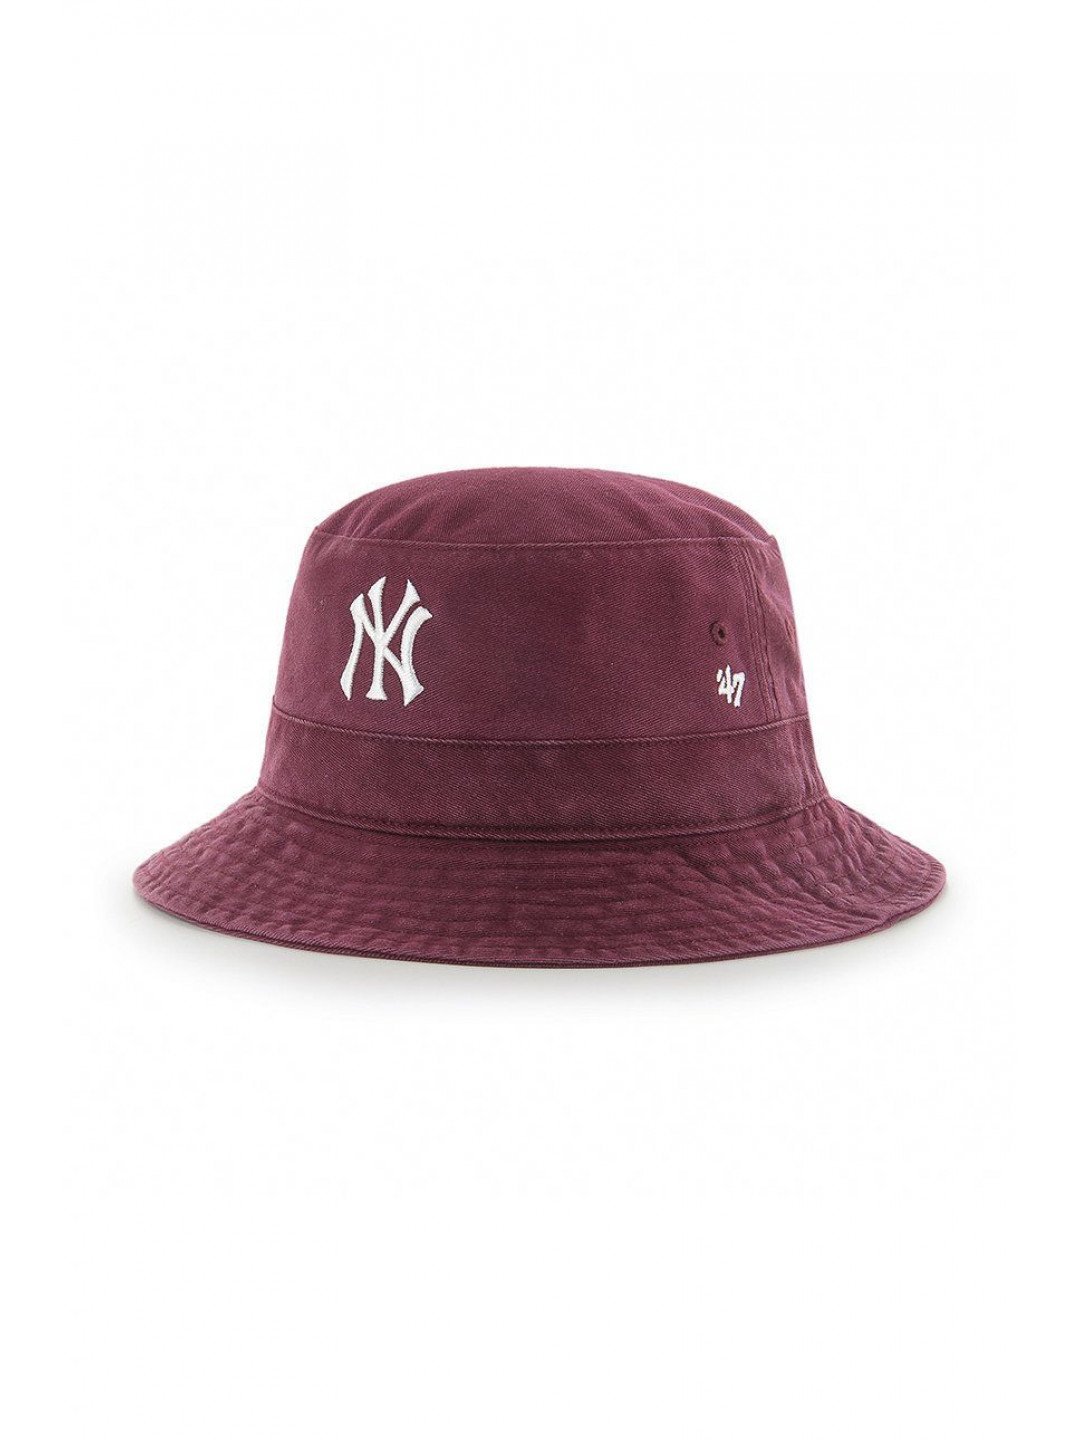 Klobouk 47brand MLB New York Yankees fialová barva bavlněný